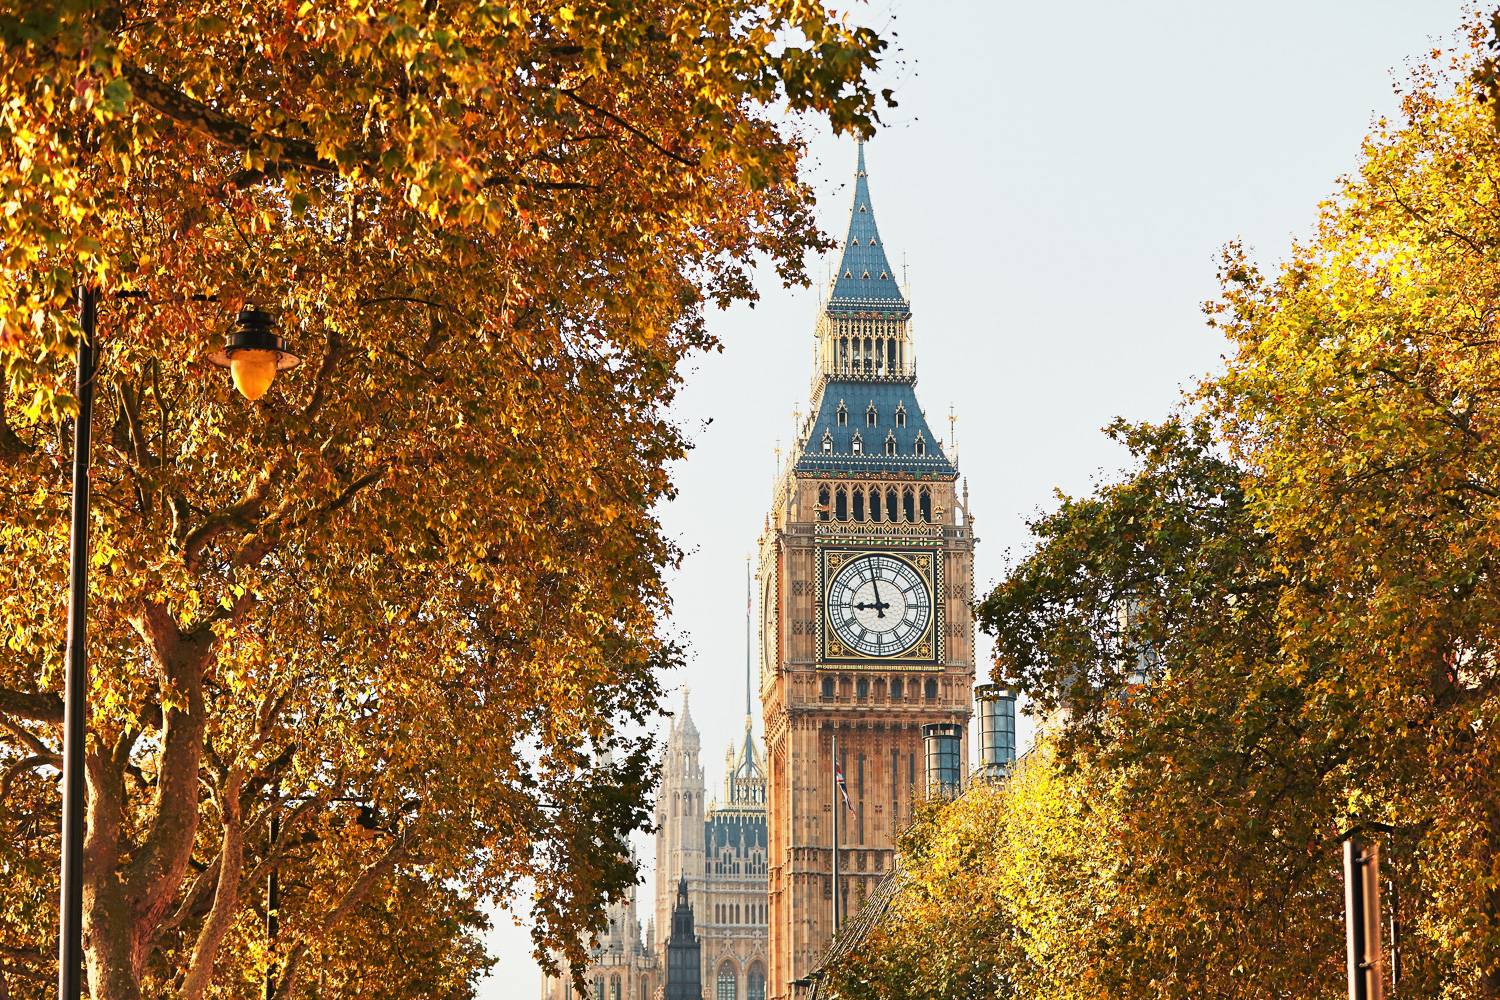 Travel Like an Englishman This Fall in London